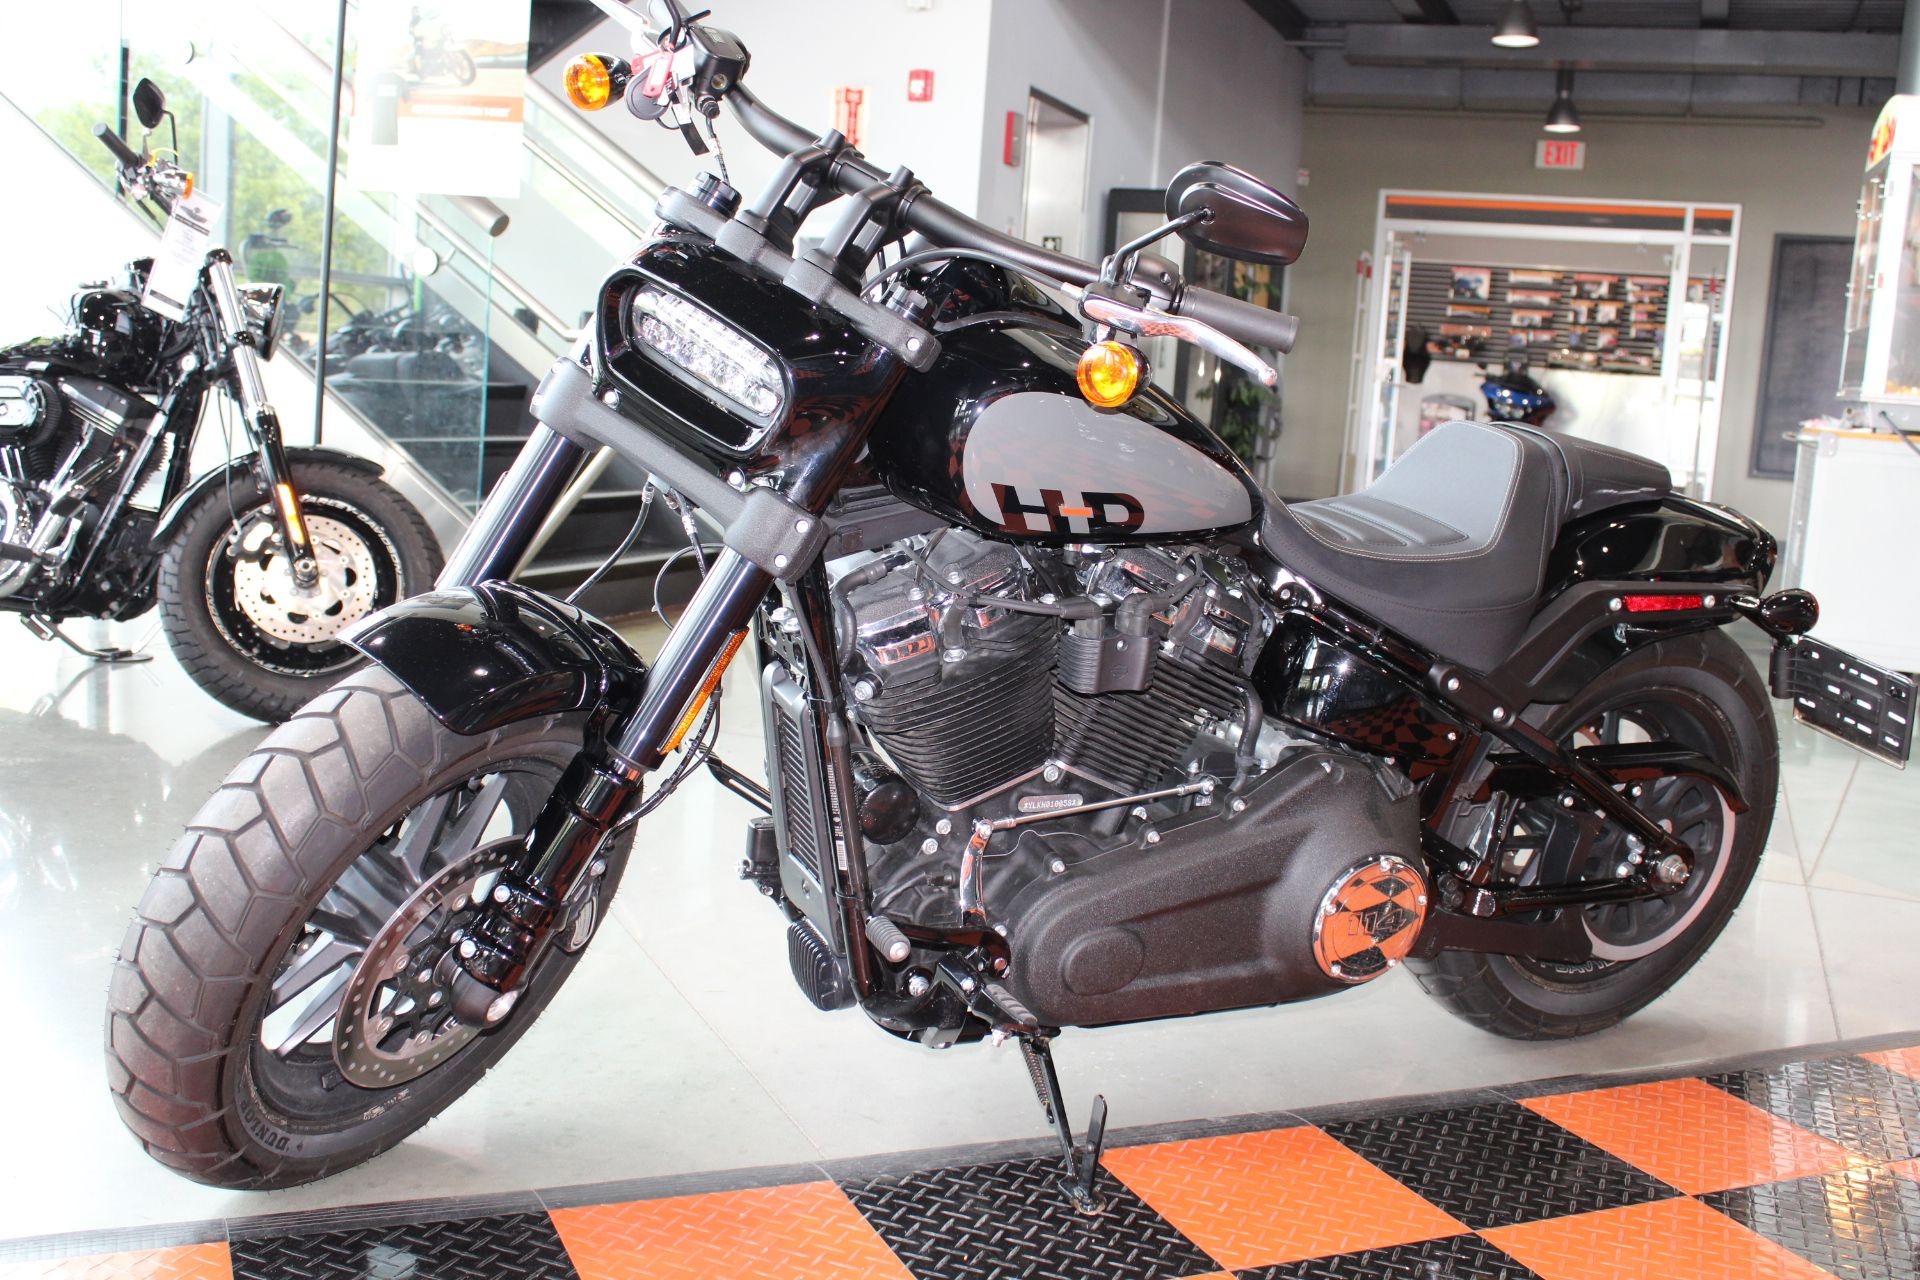 2022 Harley-Davidson Fat Bob® 114 in Shorewood, Illinois - Photo 20